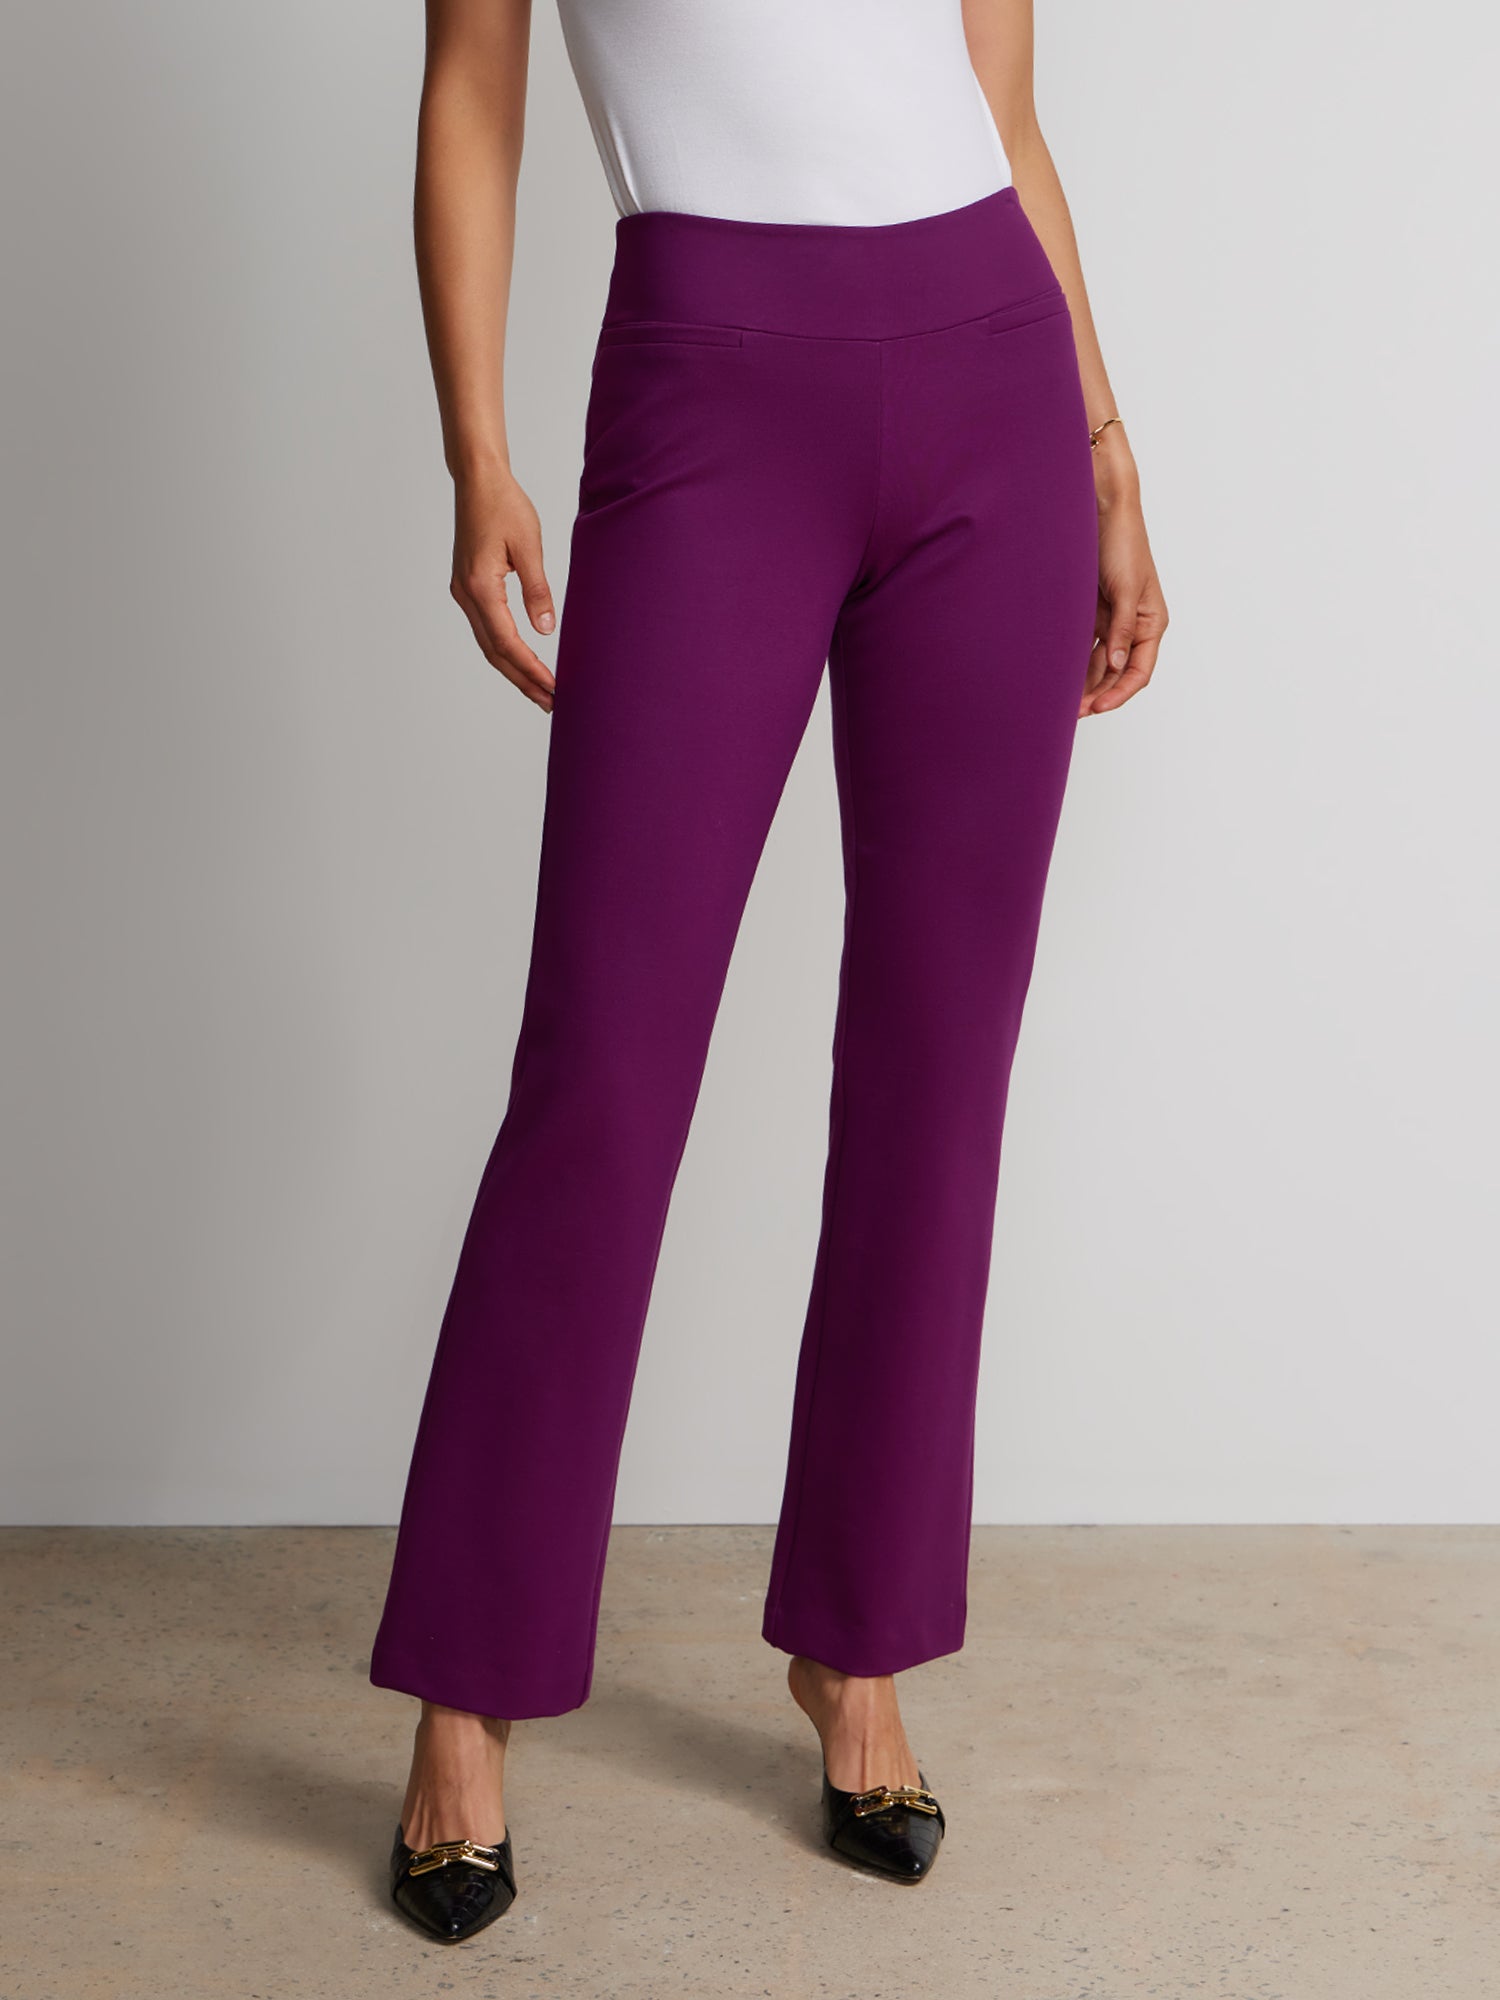 New York & Co. NY&Co Women's Tall High-Waisted Bootcut Yoga Pants